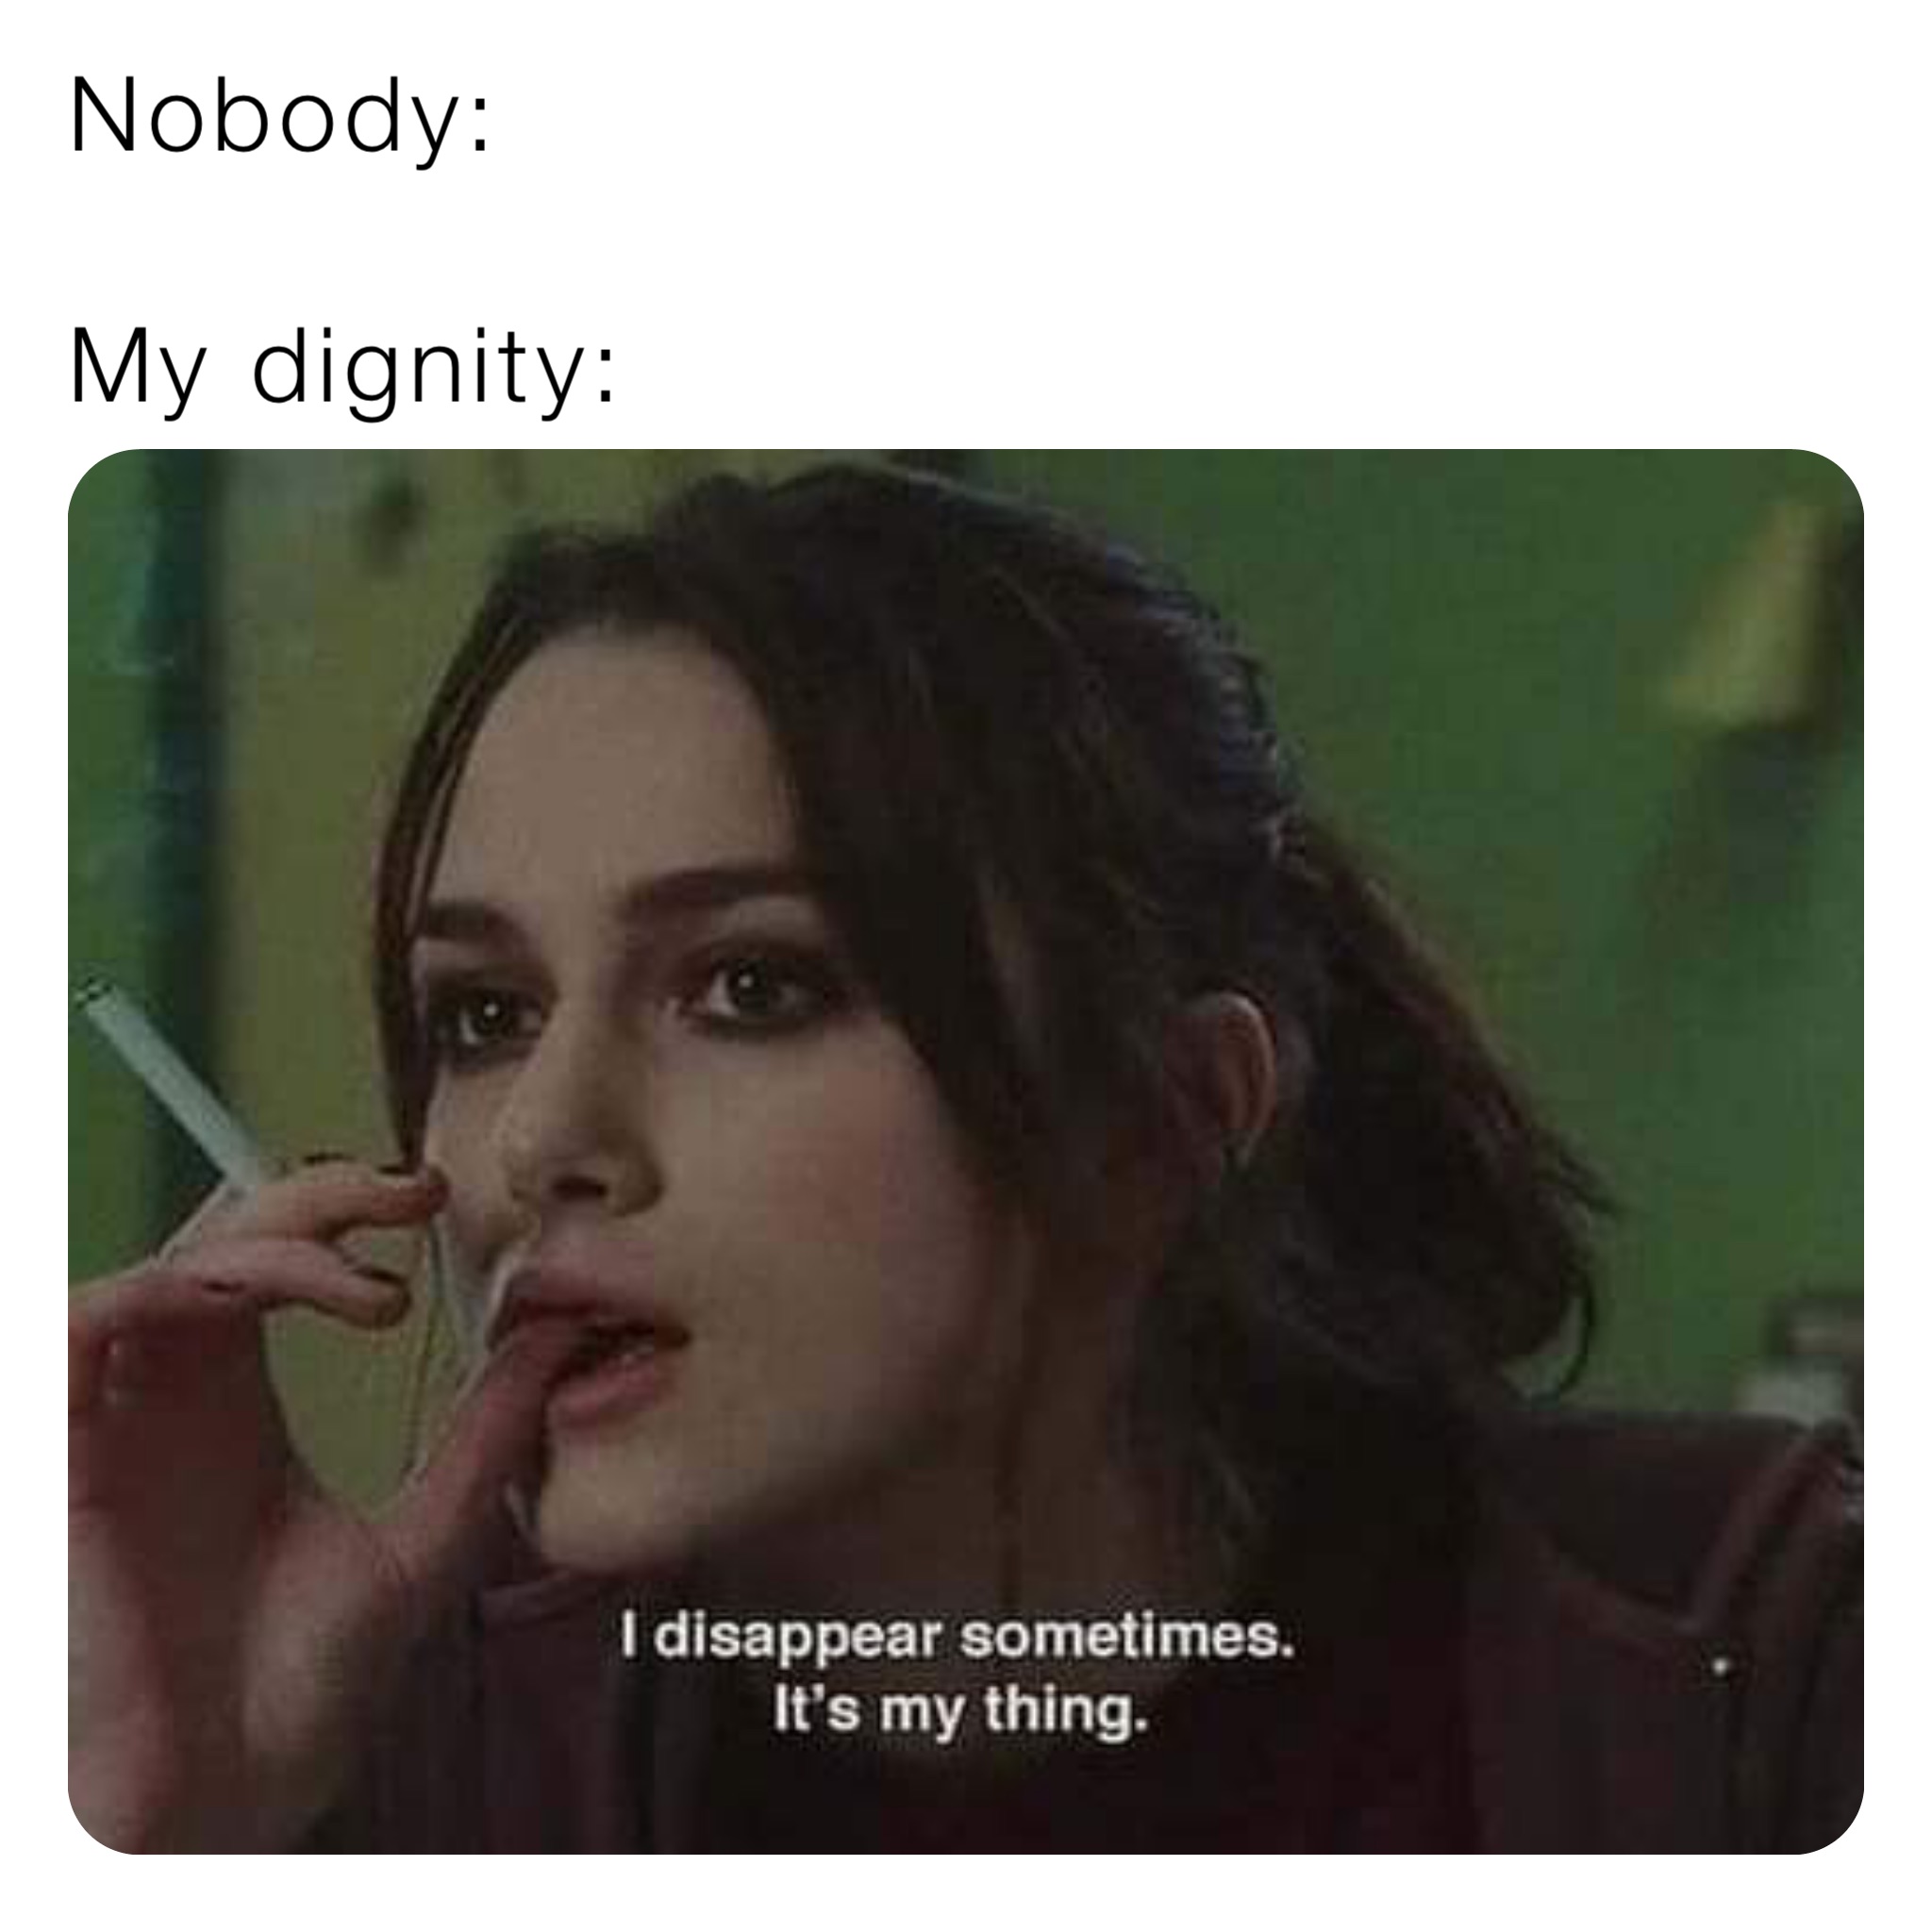 Nobody:

My dignity: